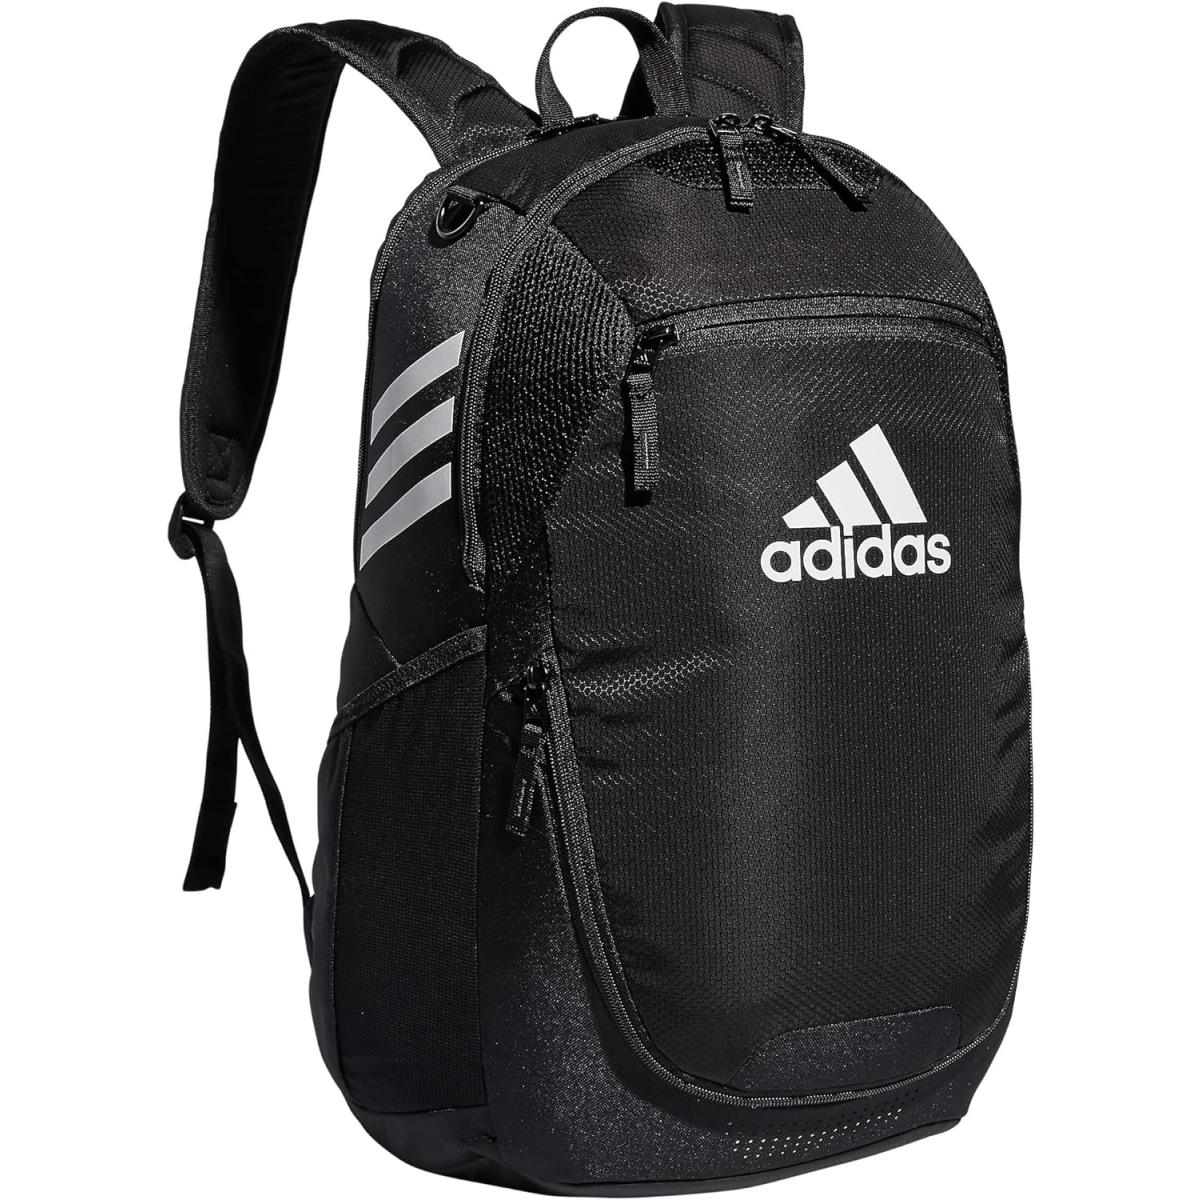 Adidas Stadium 3 Team Sports Backpack Black One Size